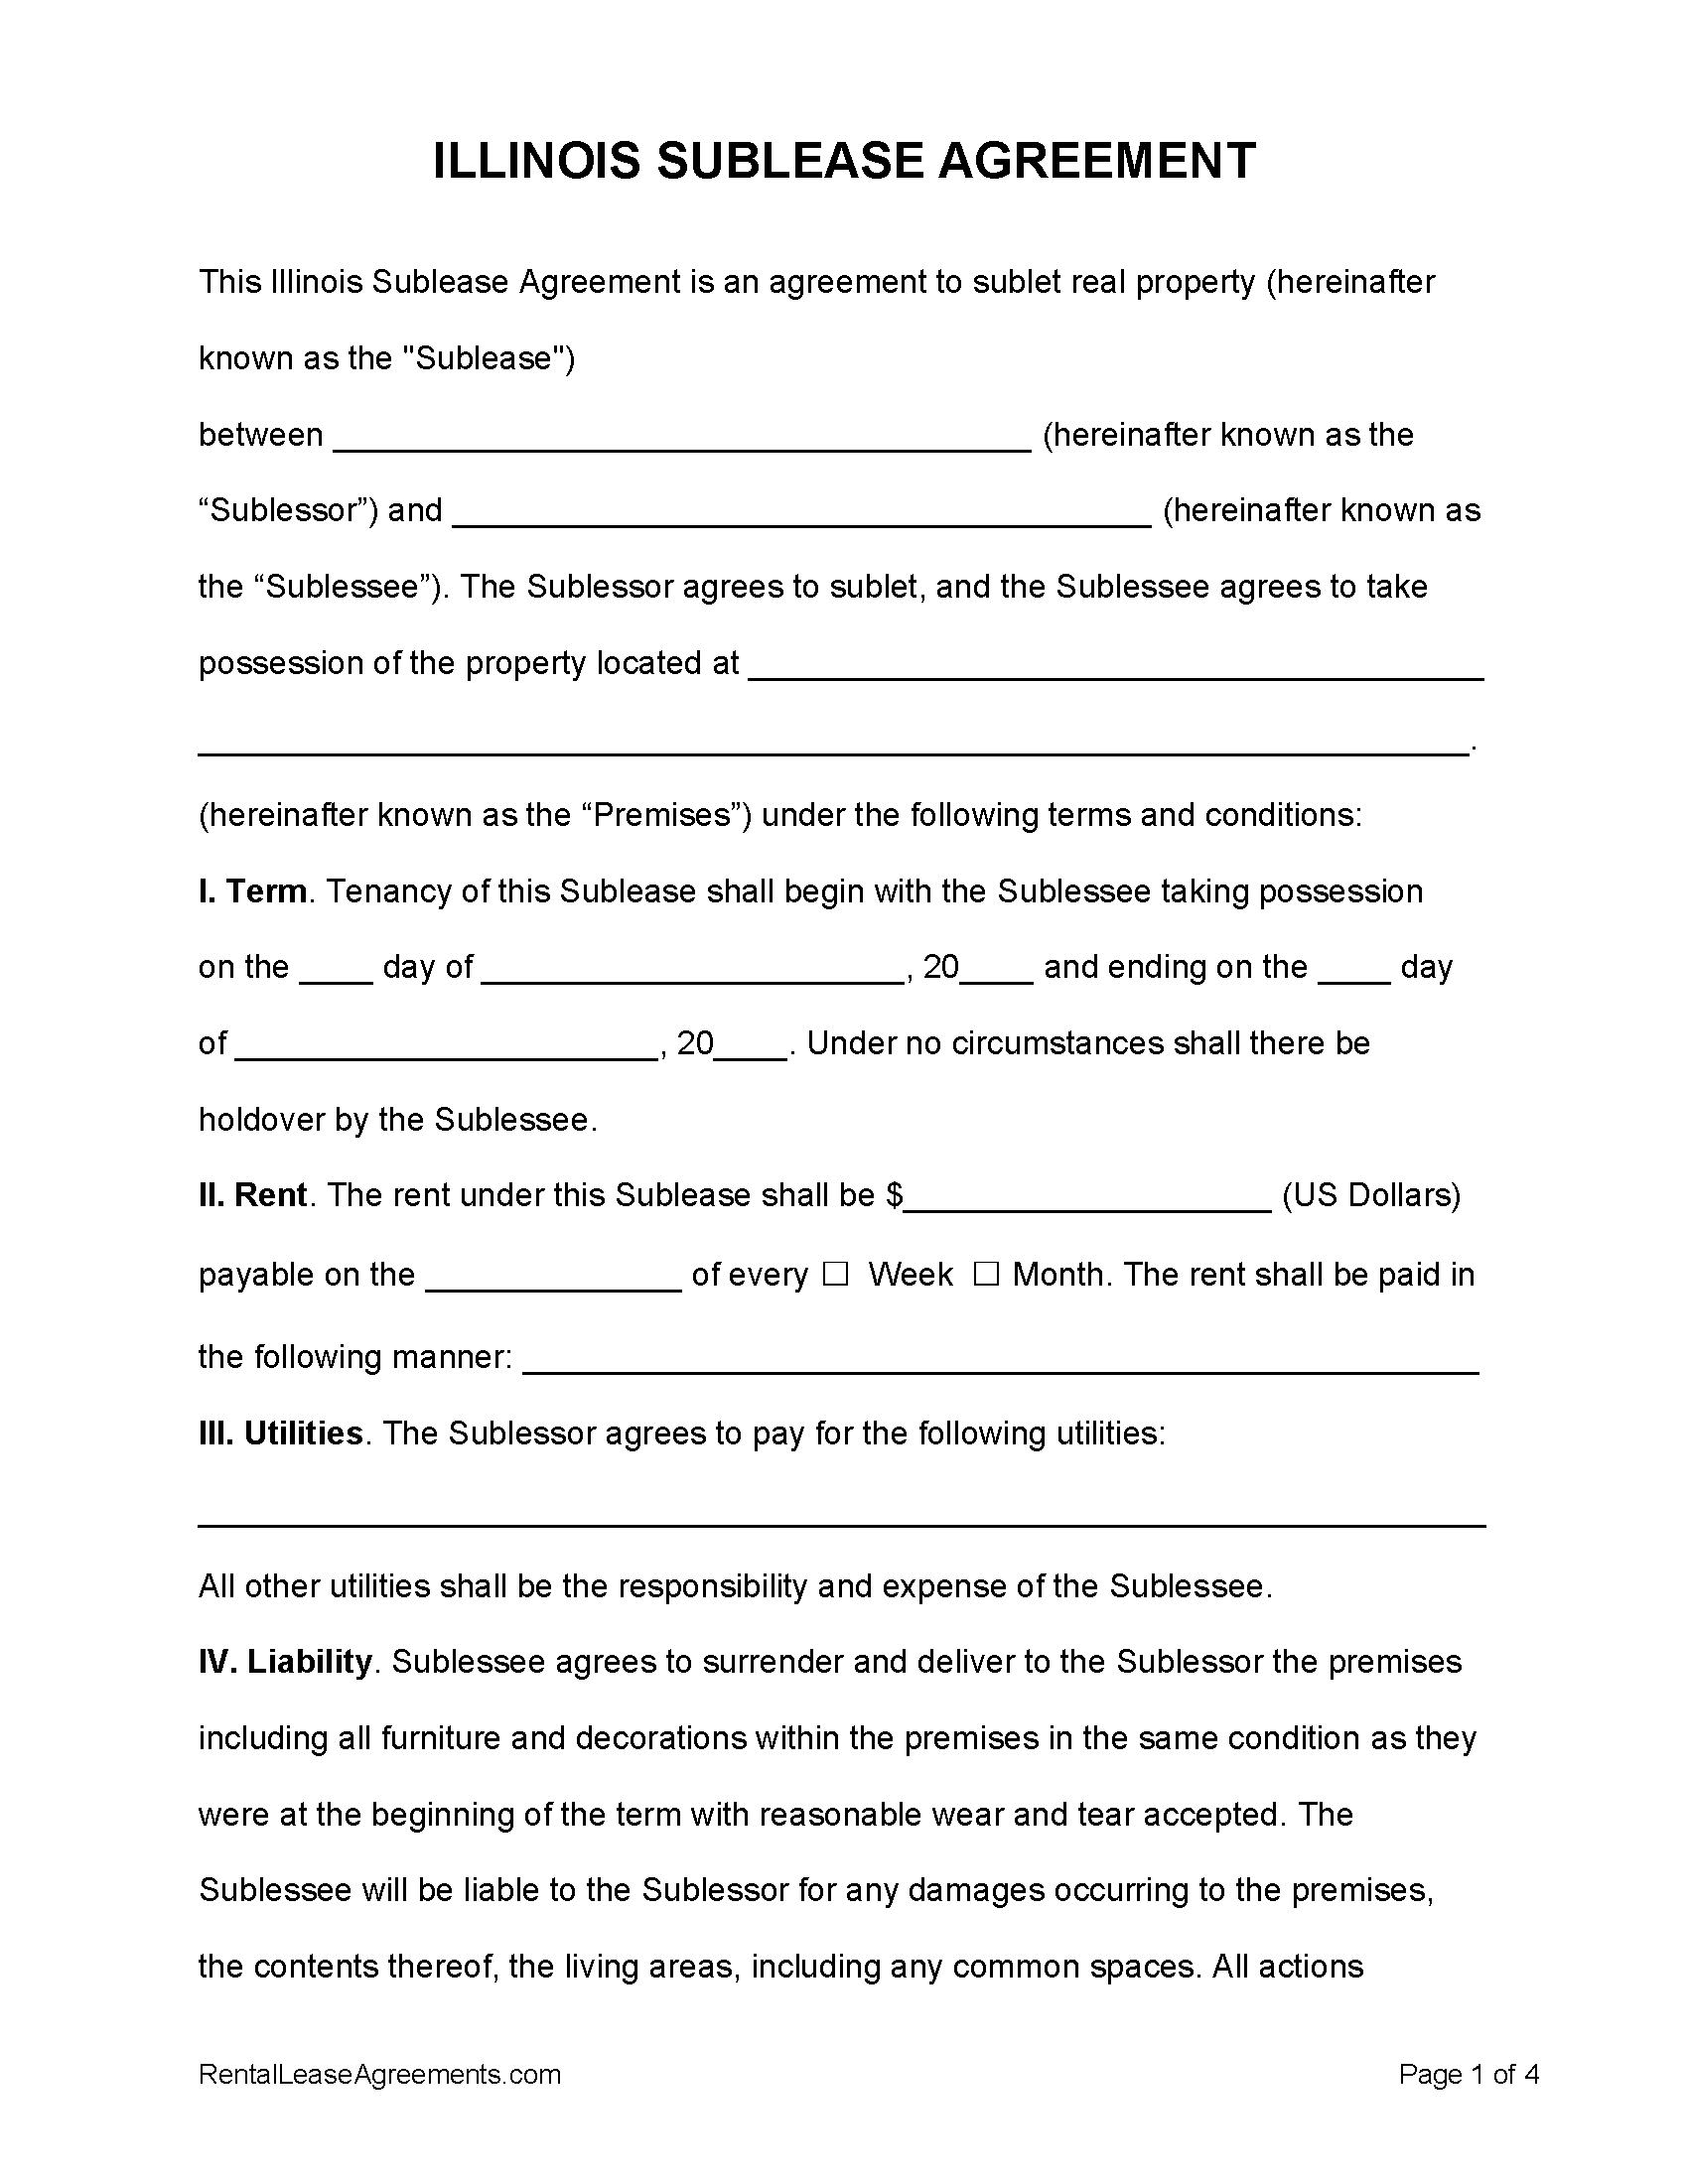 illinois-sublease-agreement-pdf-ms-word-free-printable-rental